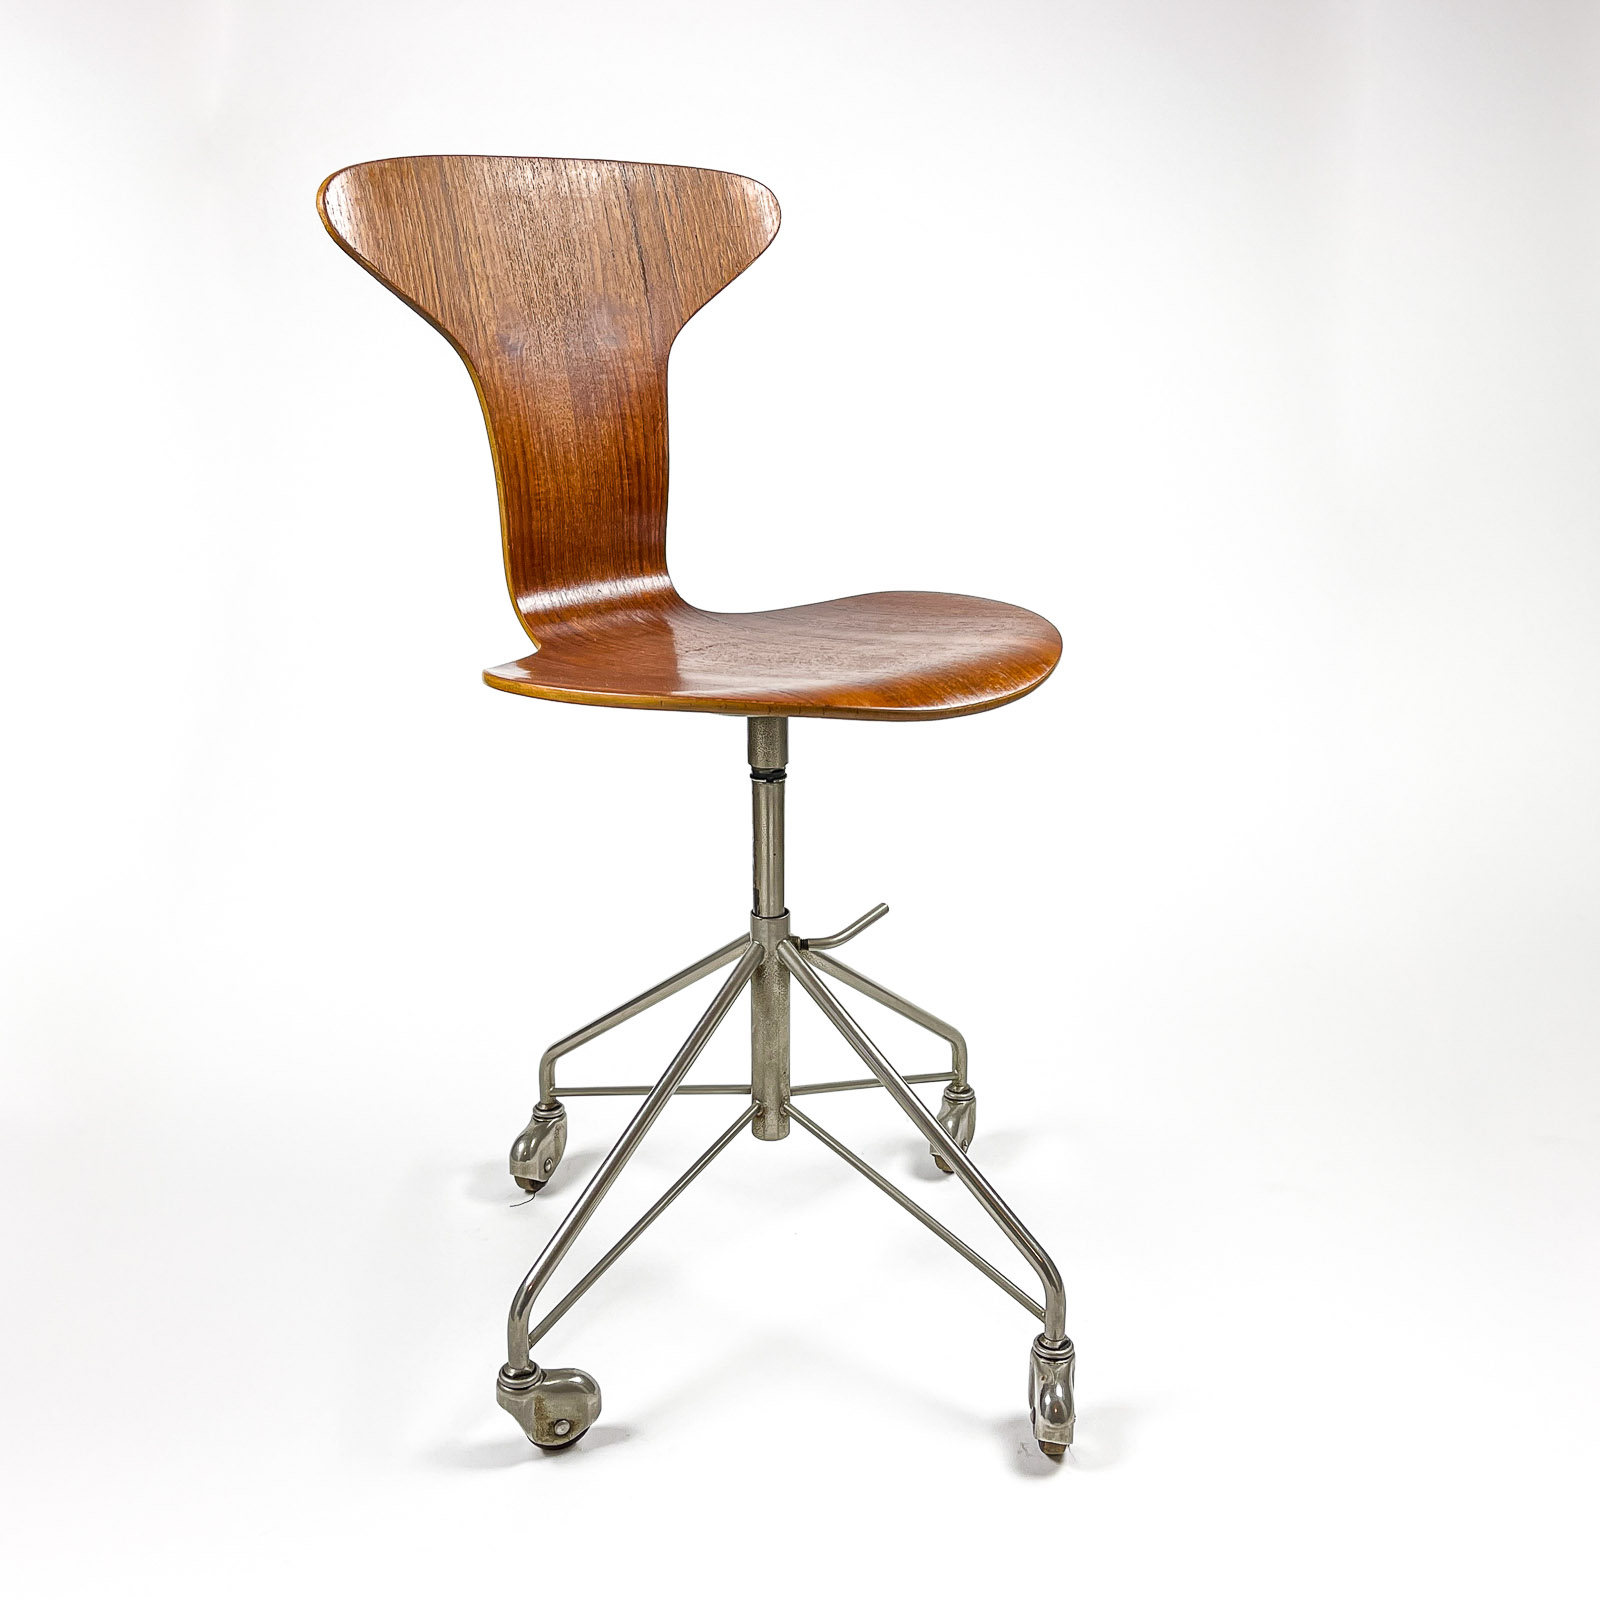 Arne Jacobsen - A "Mosquito" Office Swifel Chair, model 3115 - Fritz Hansen, Denmark 1950's